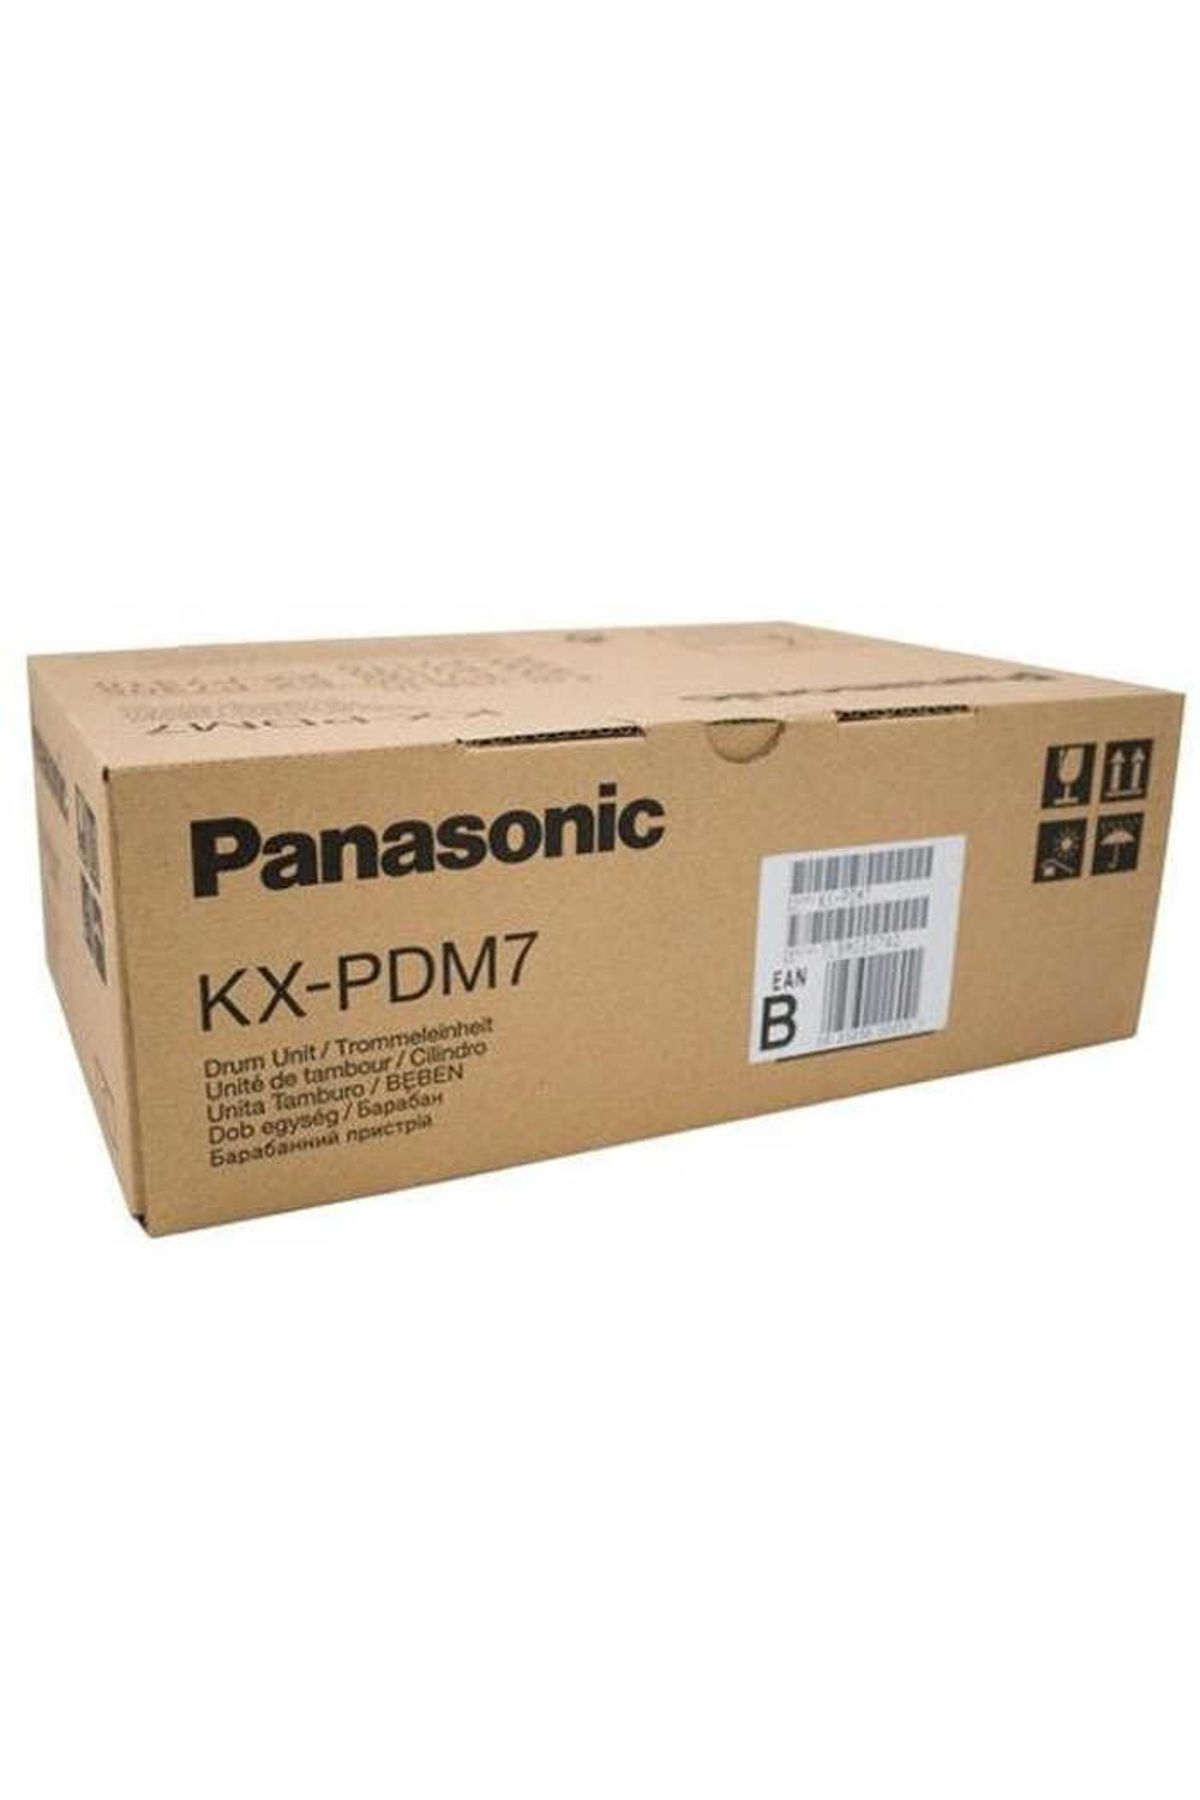 Panasonic HPZR Panasonic KX-PDM7  Drum Ünitesi